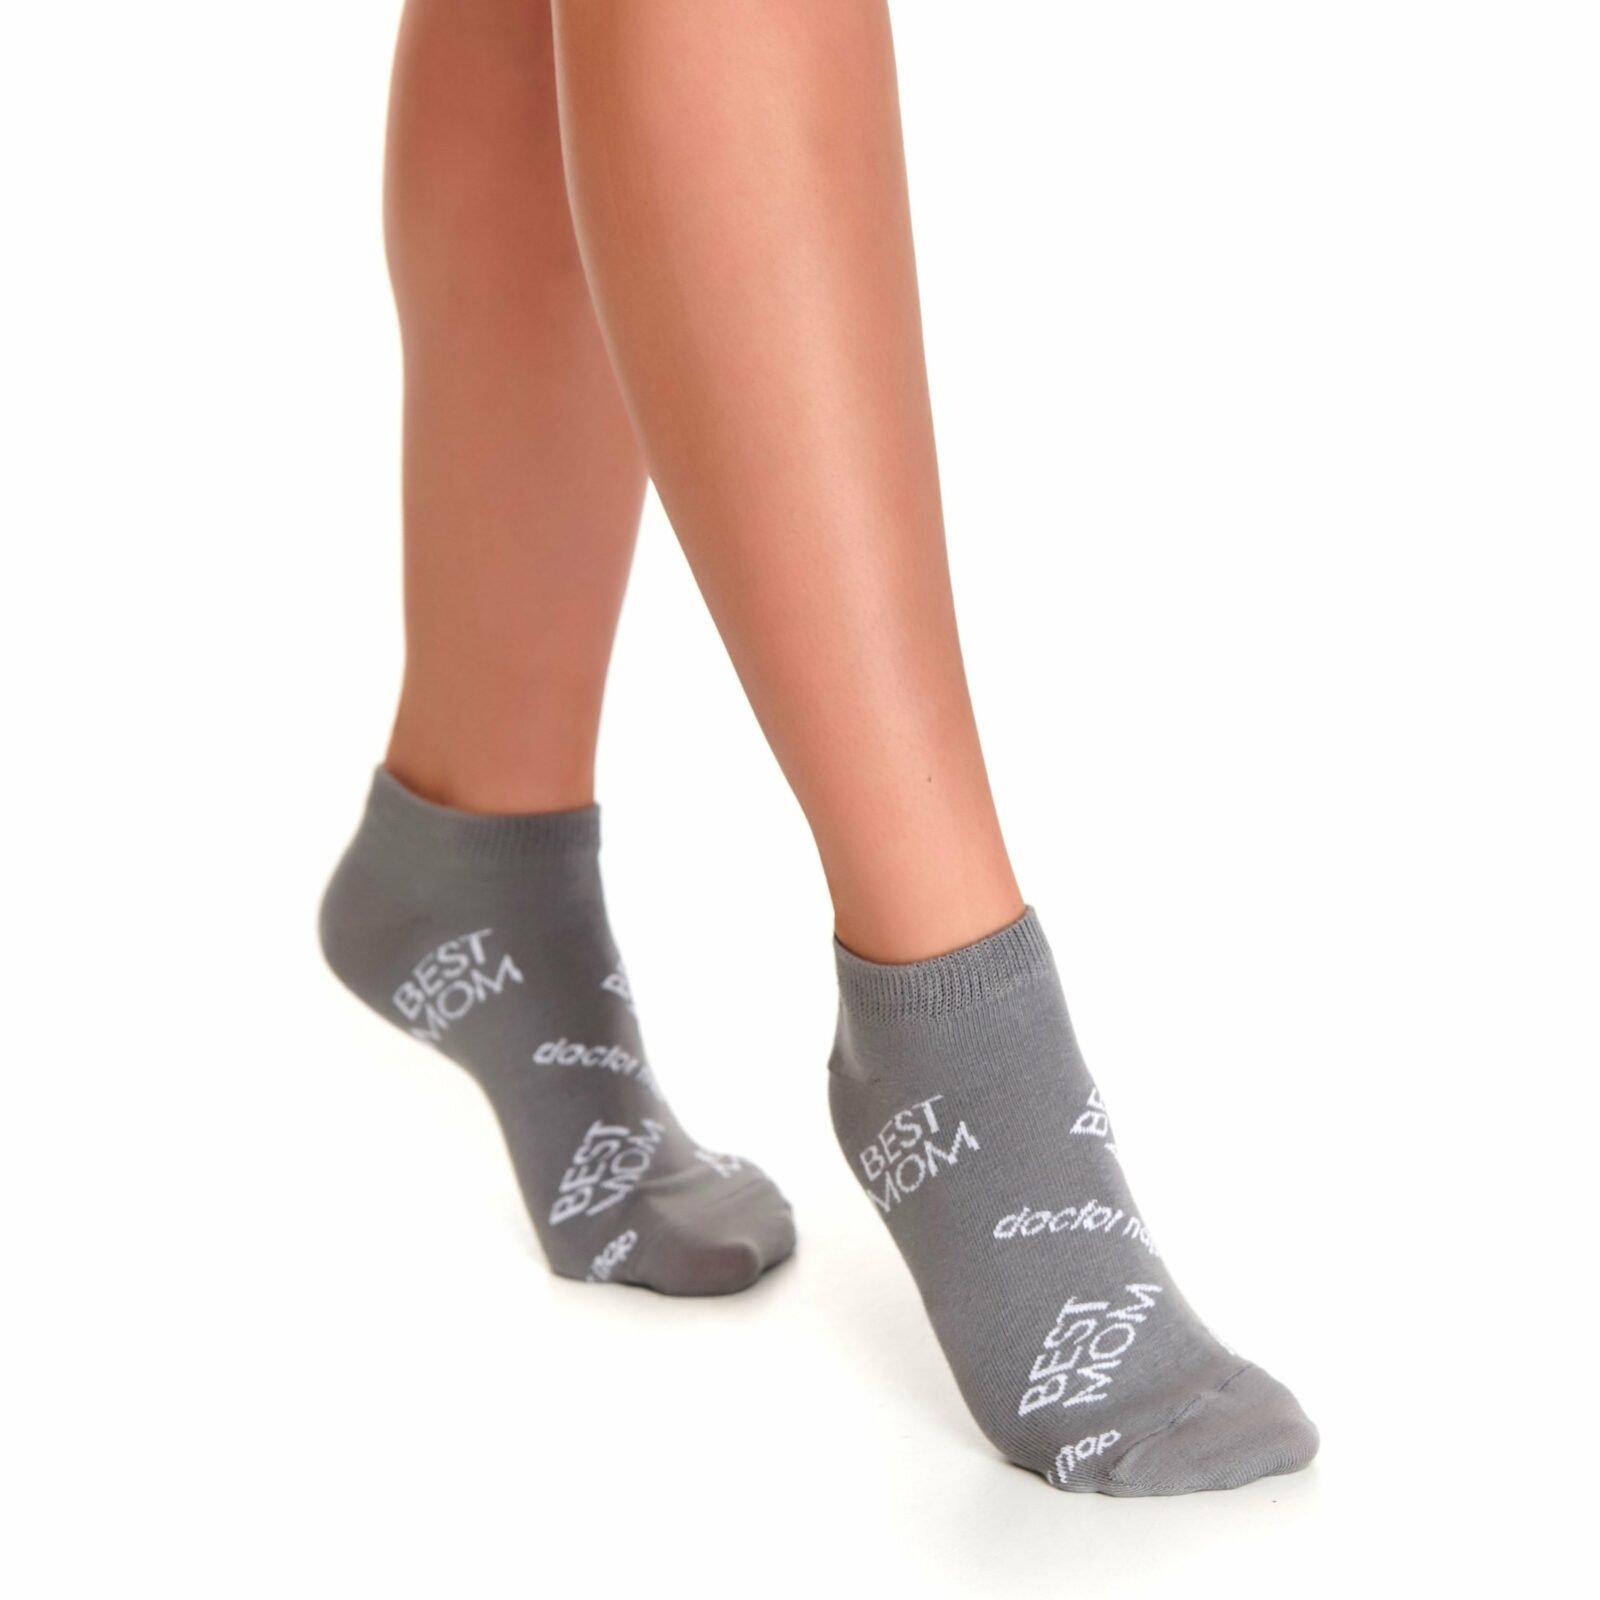 Doctor Nap Woman's Socks